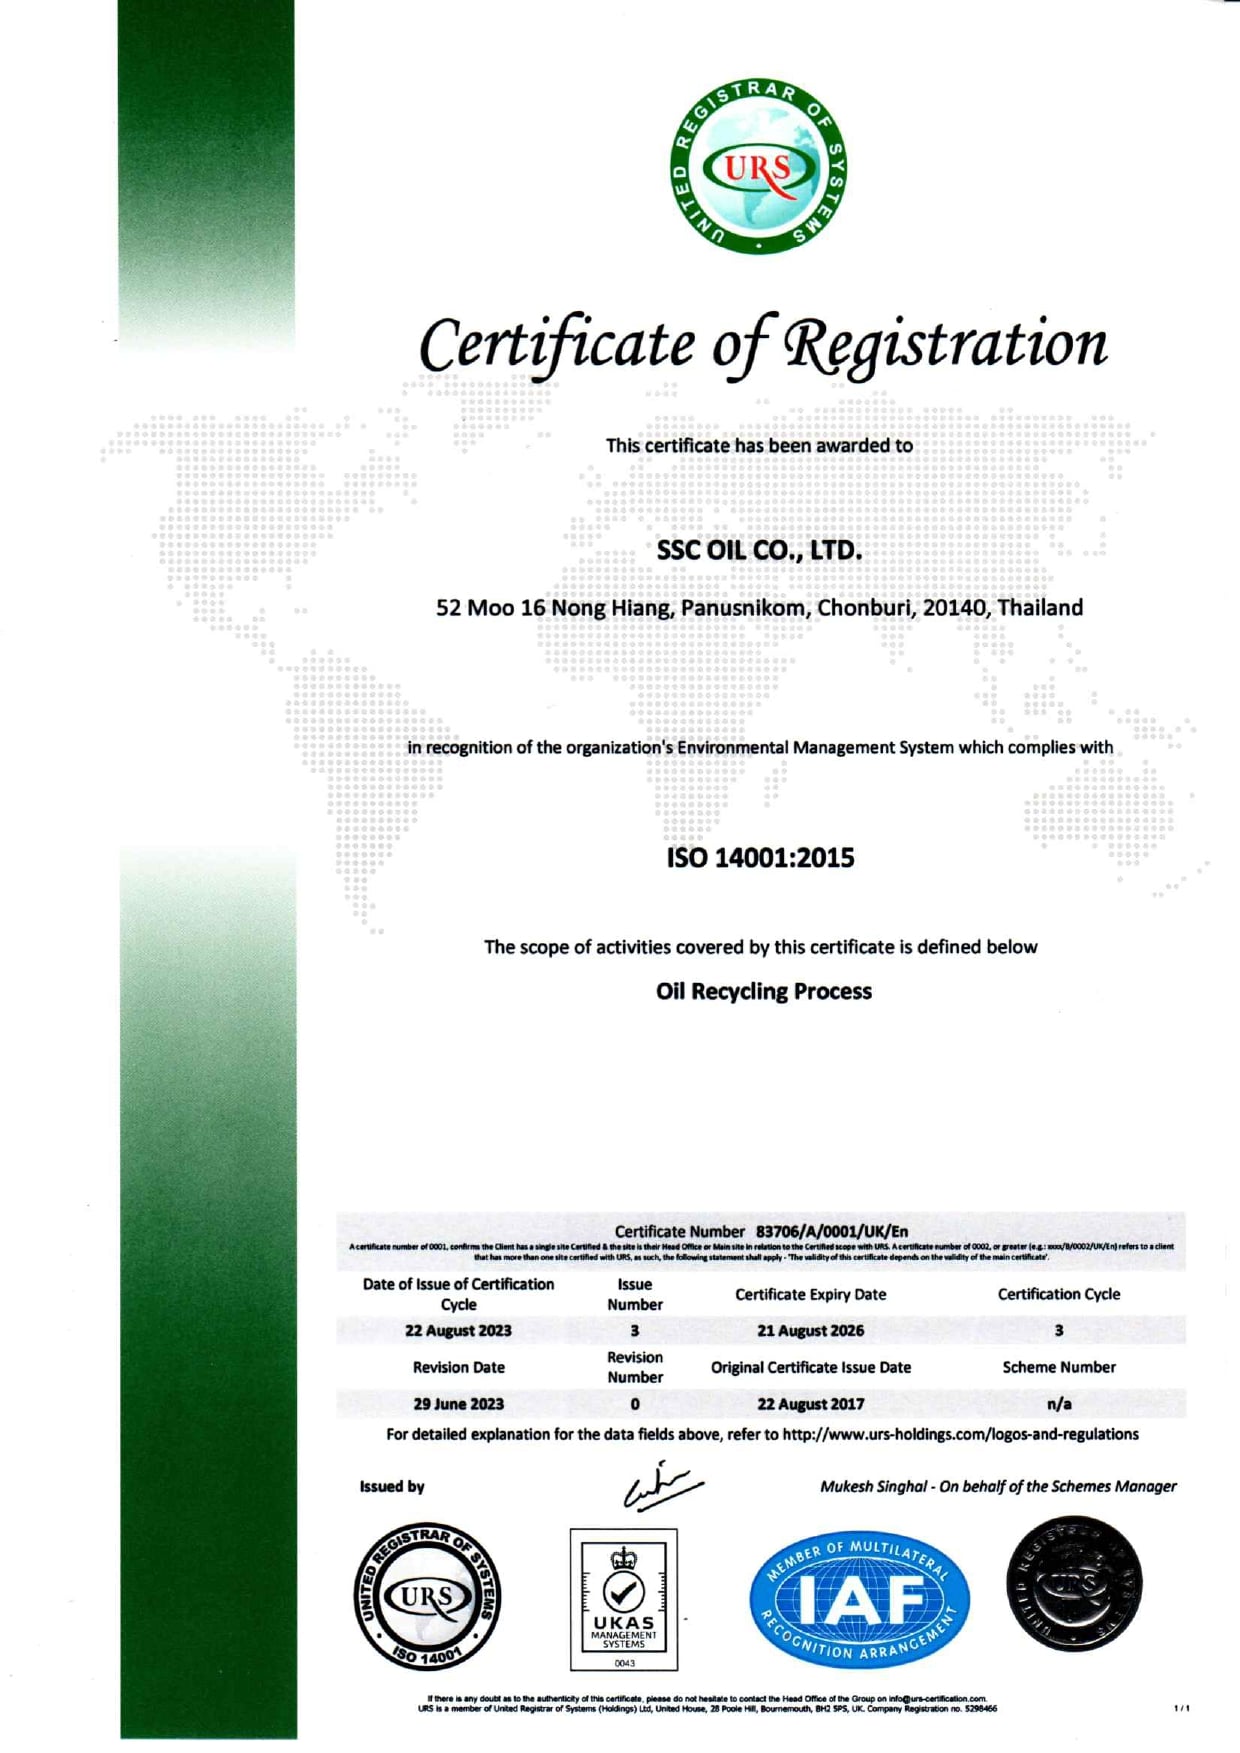 Certificate for ISO 14001-2015 for ssc oil